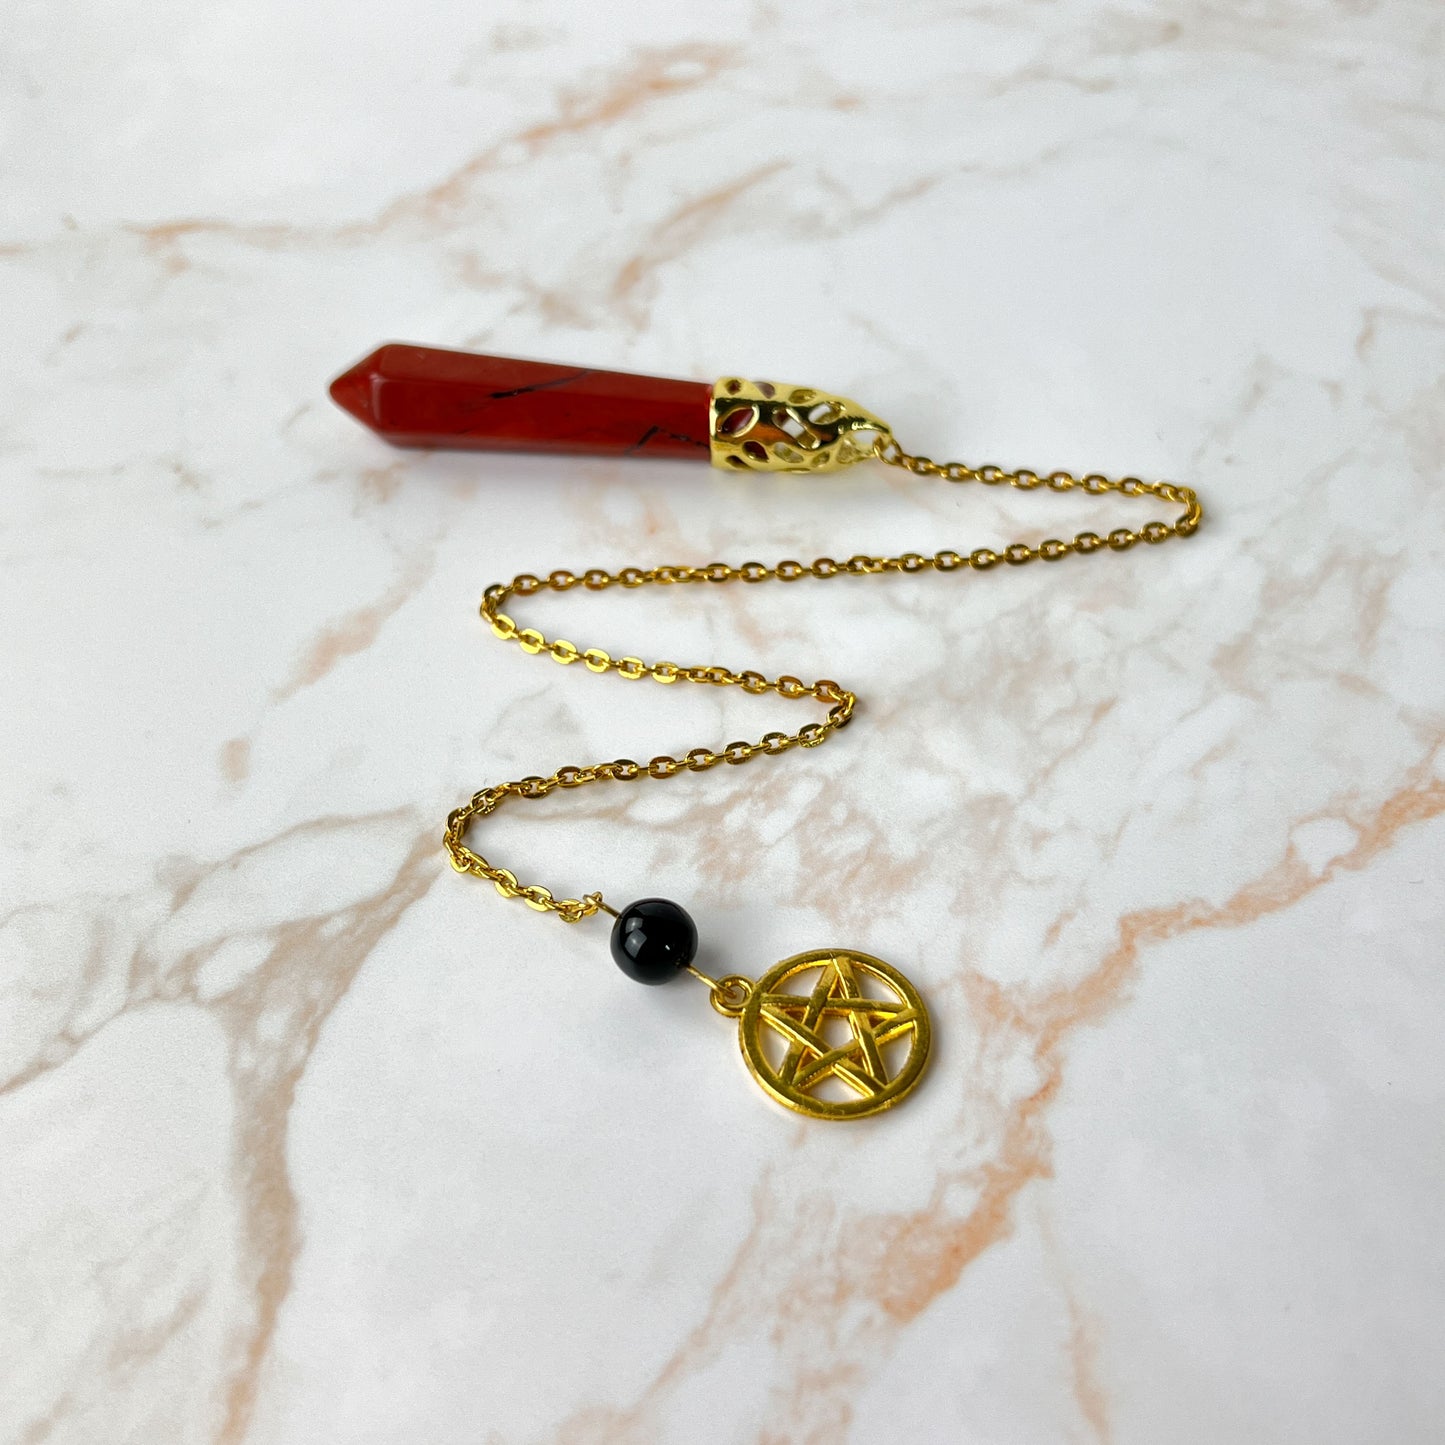 Golden Red jasper and obsidian pentacle pendulum Baguette Magick